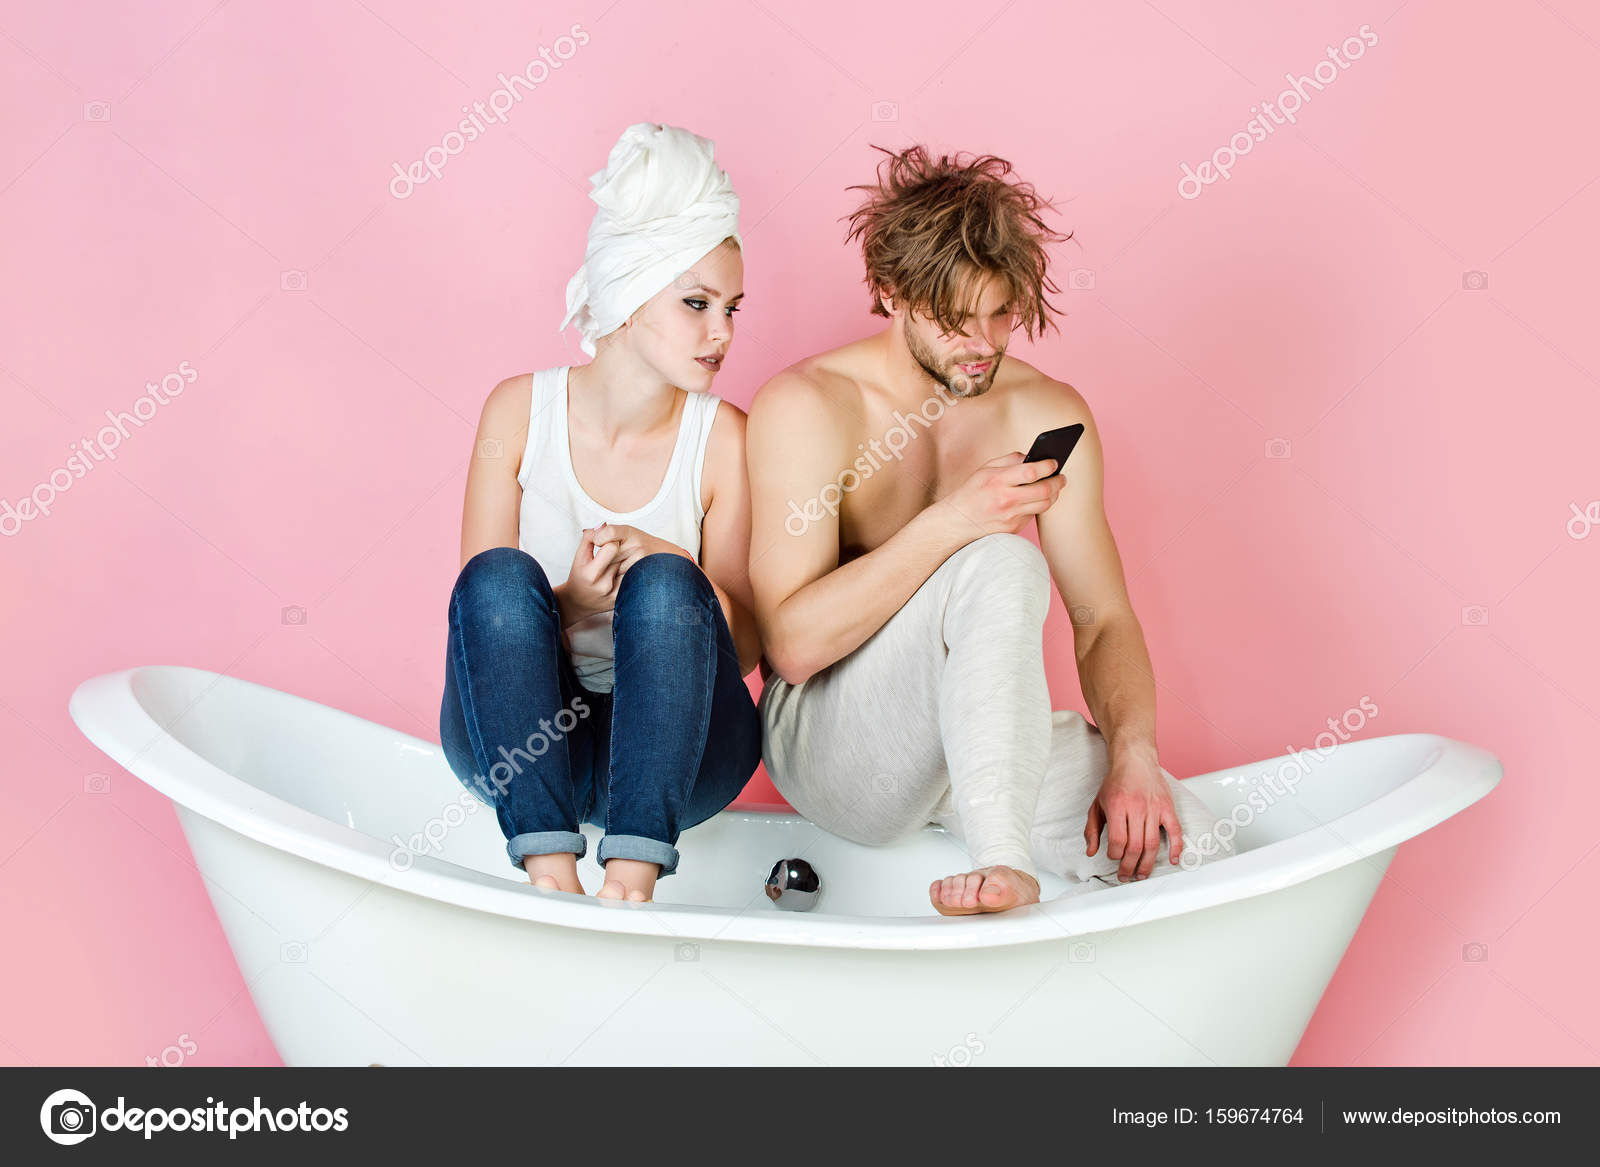 hard nude couples selfie